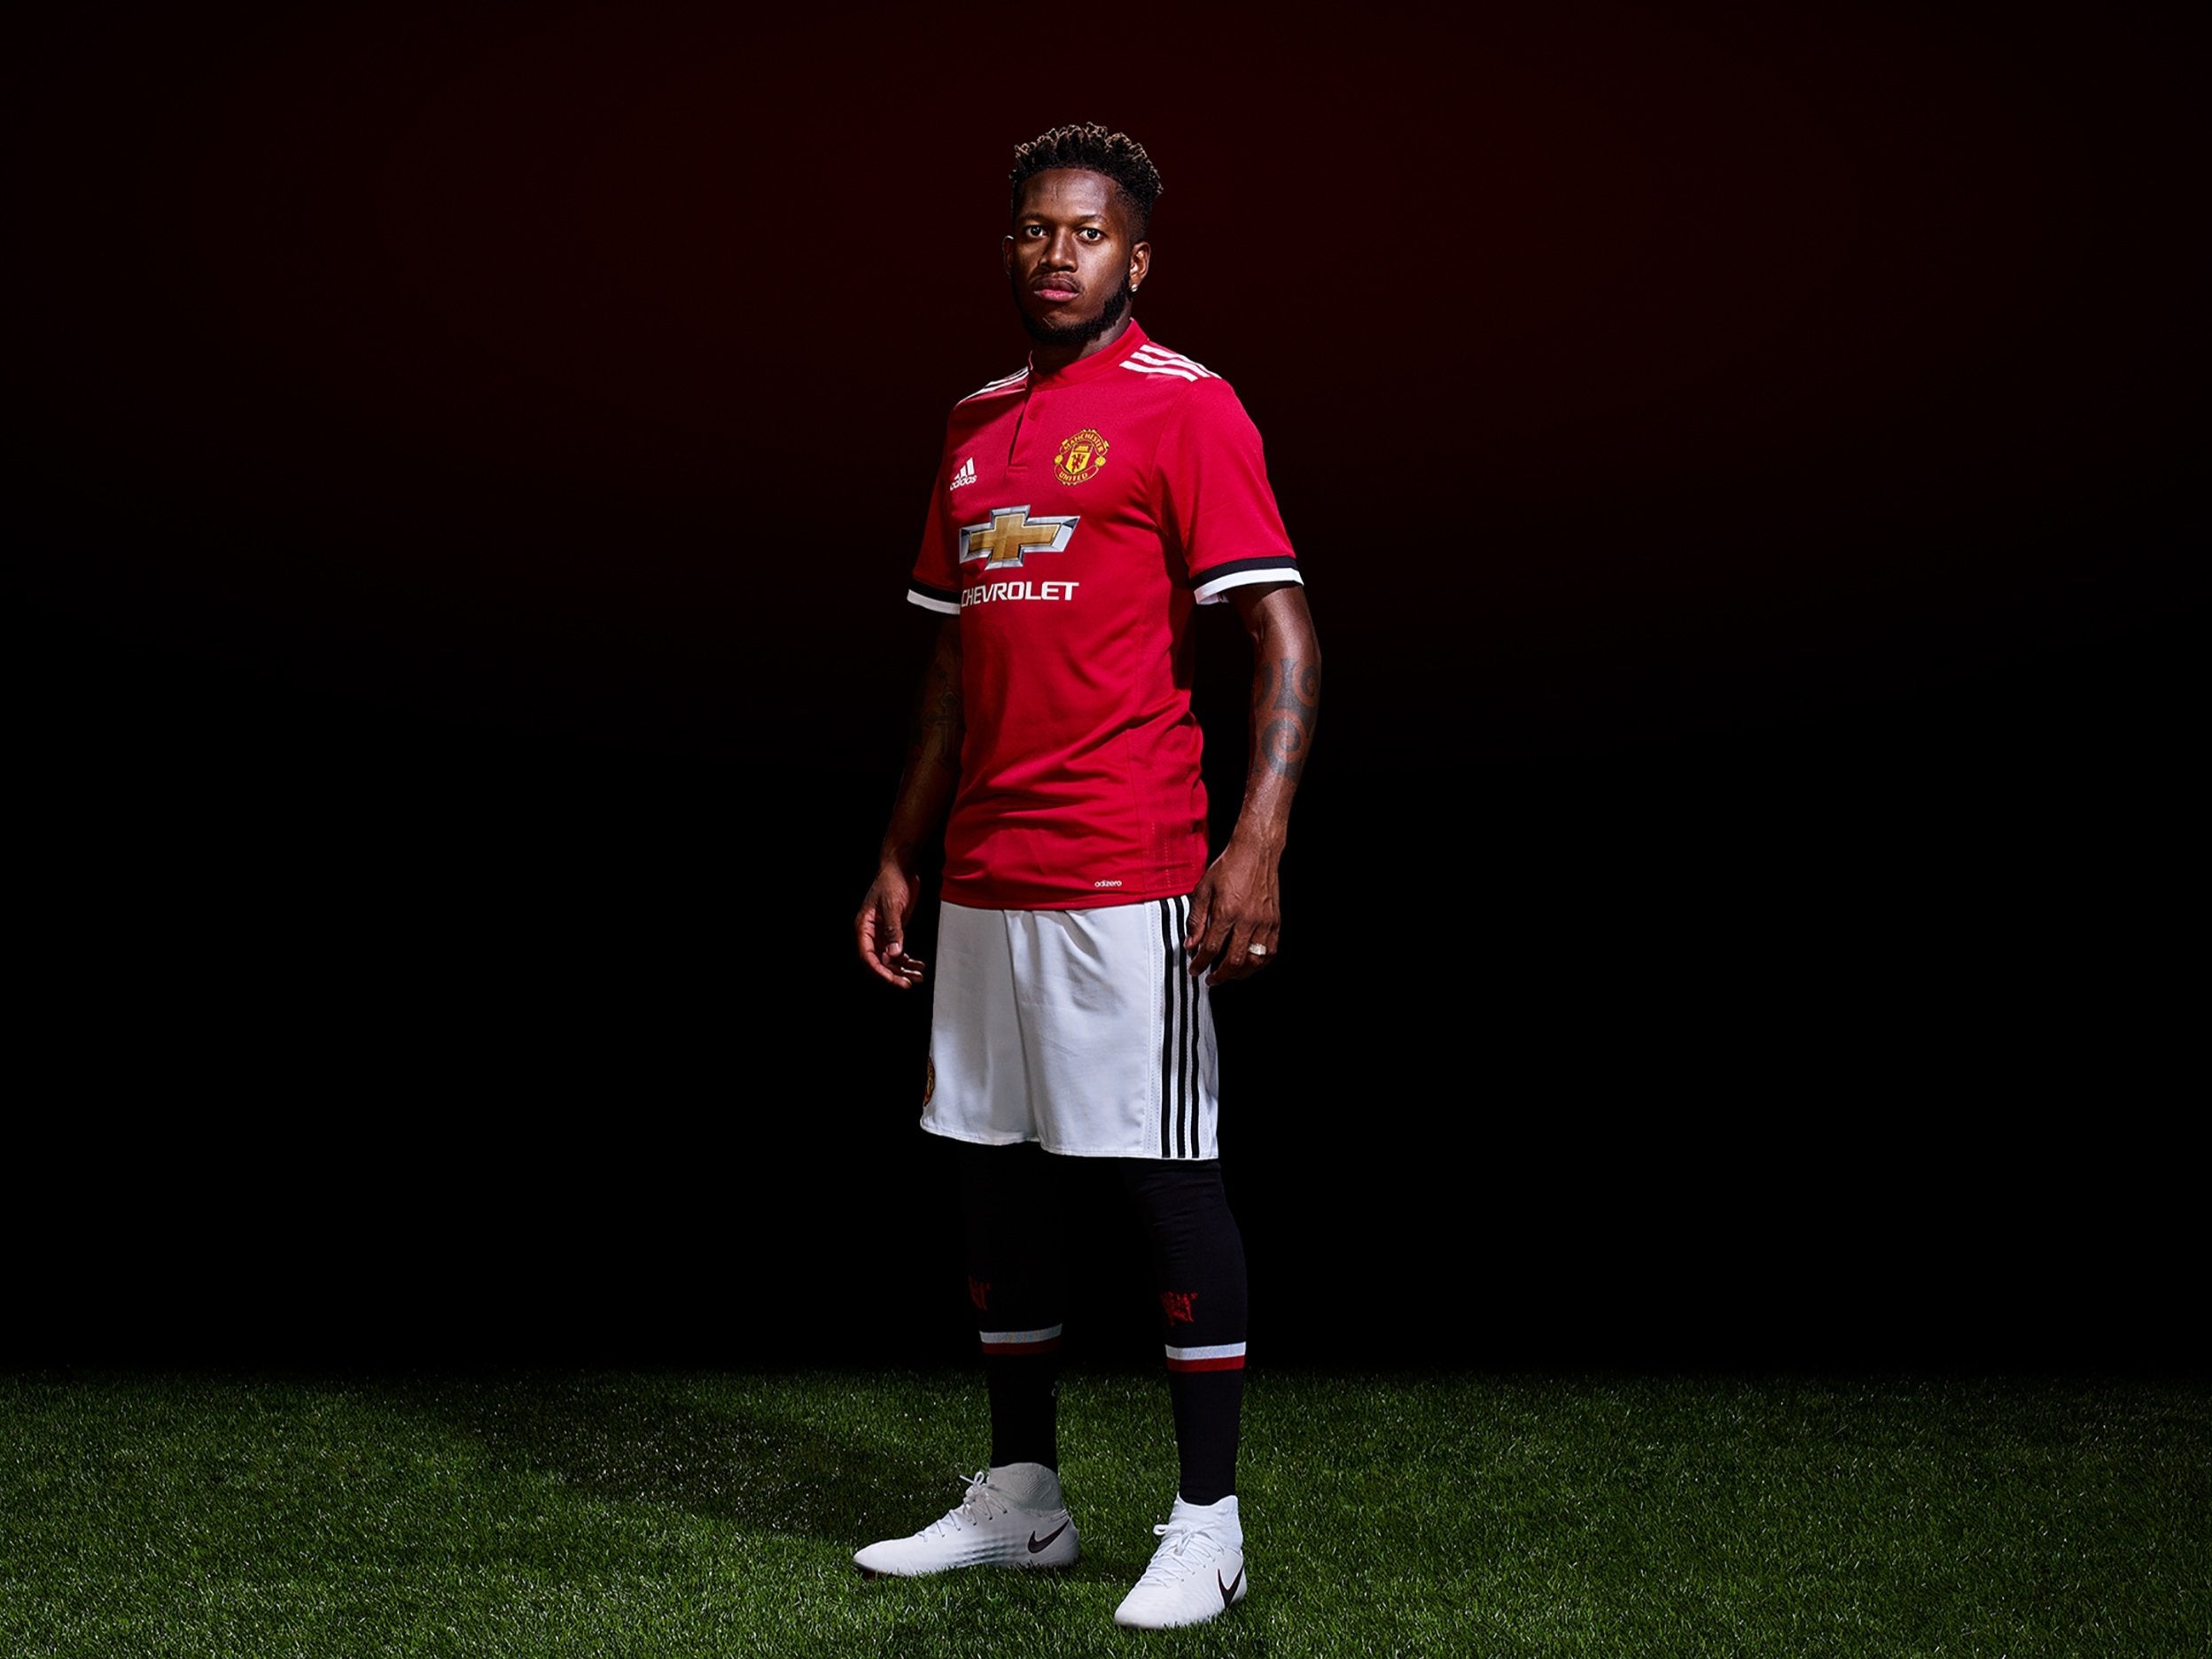 (Man Utd via Getty Images